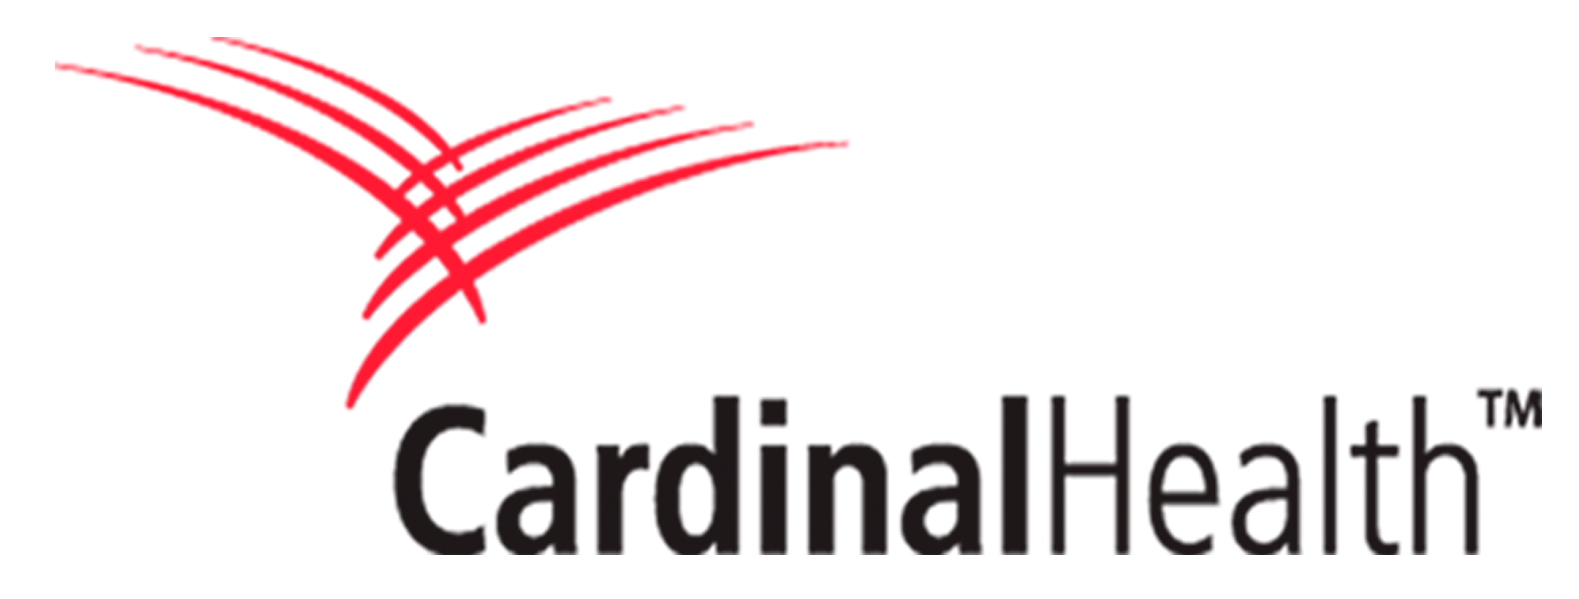 Логотип бренда Cardinal Health